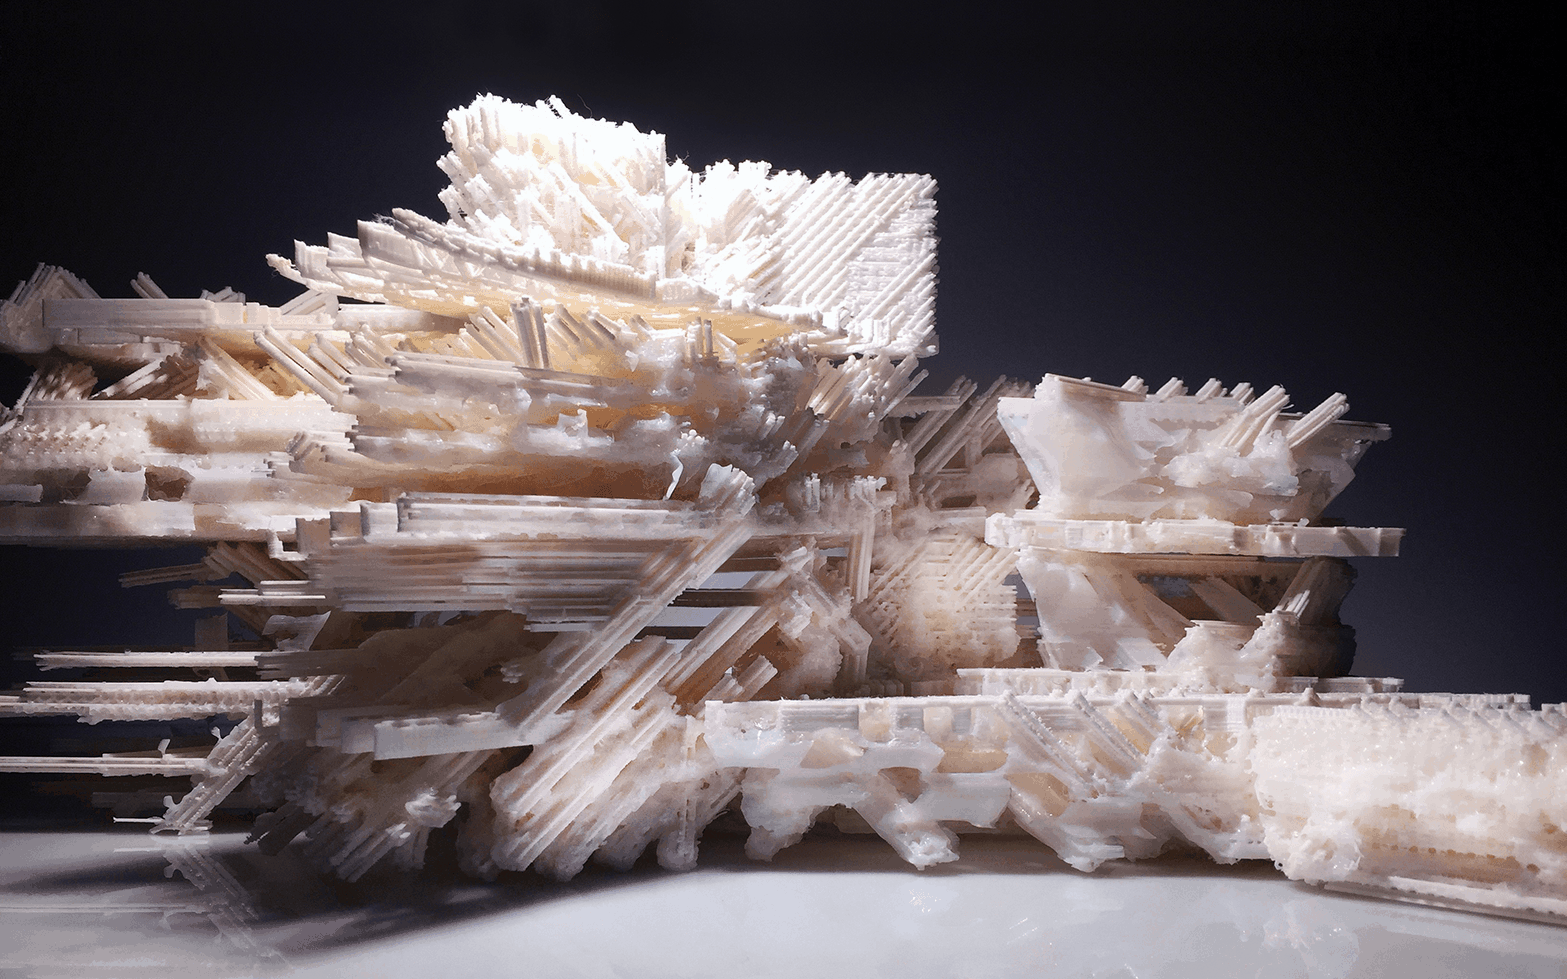 3D printed Architetcural model